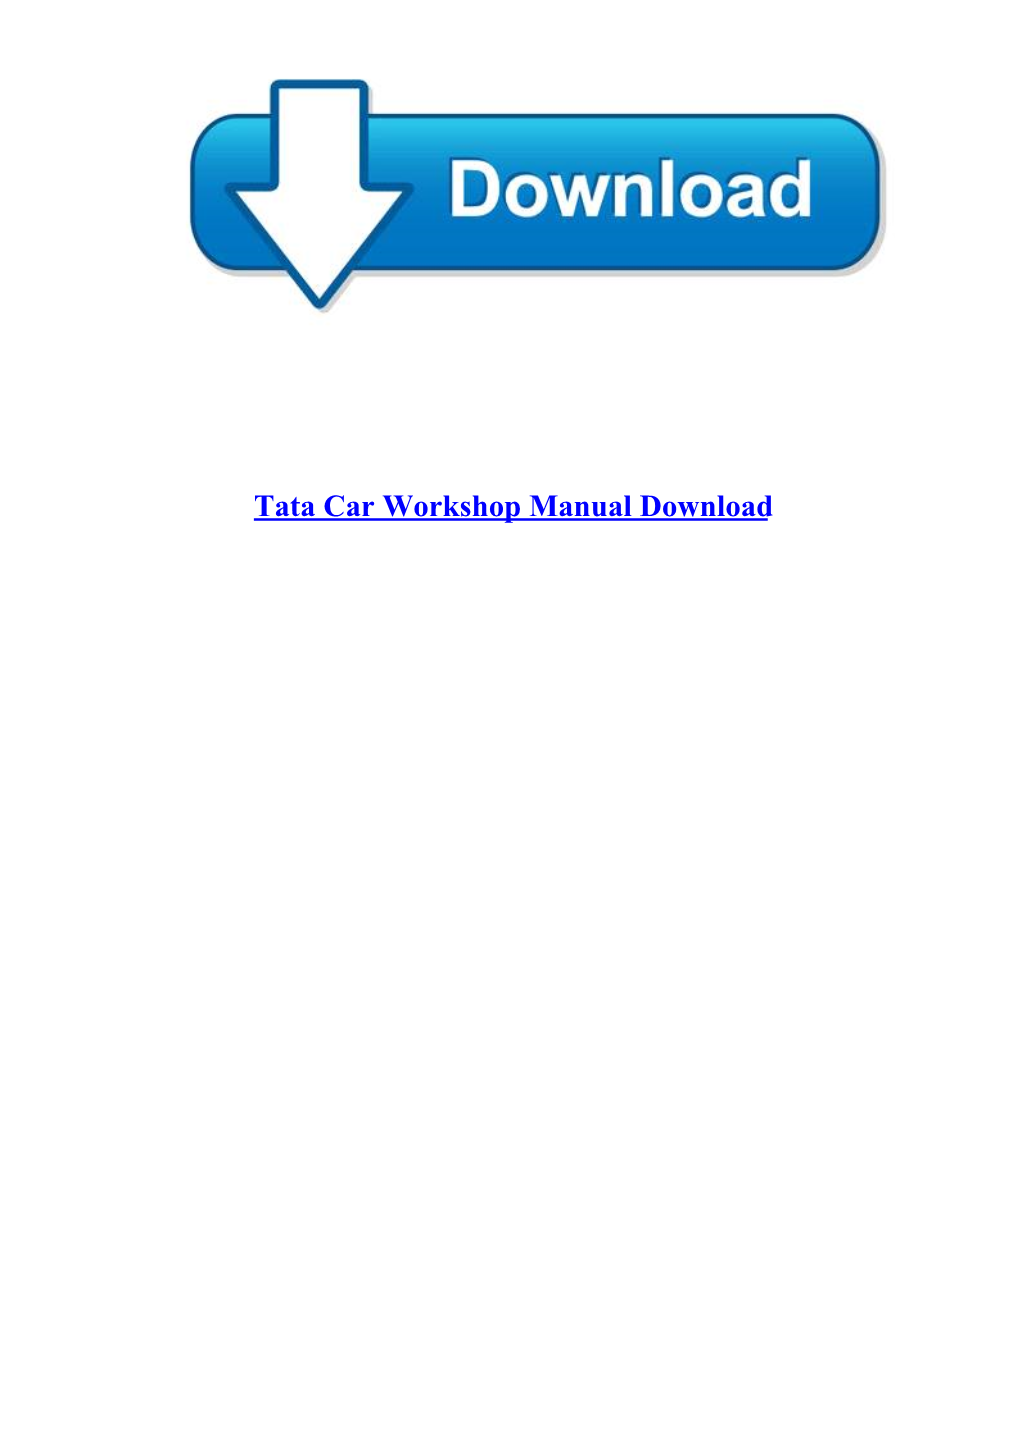 [Cloud E-Book PDF] Tata Car Workshop Manual